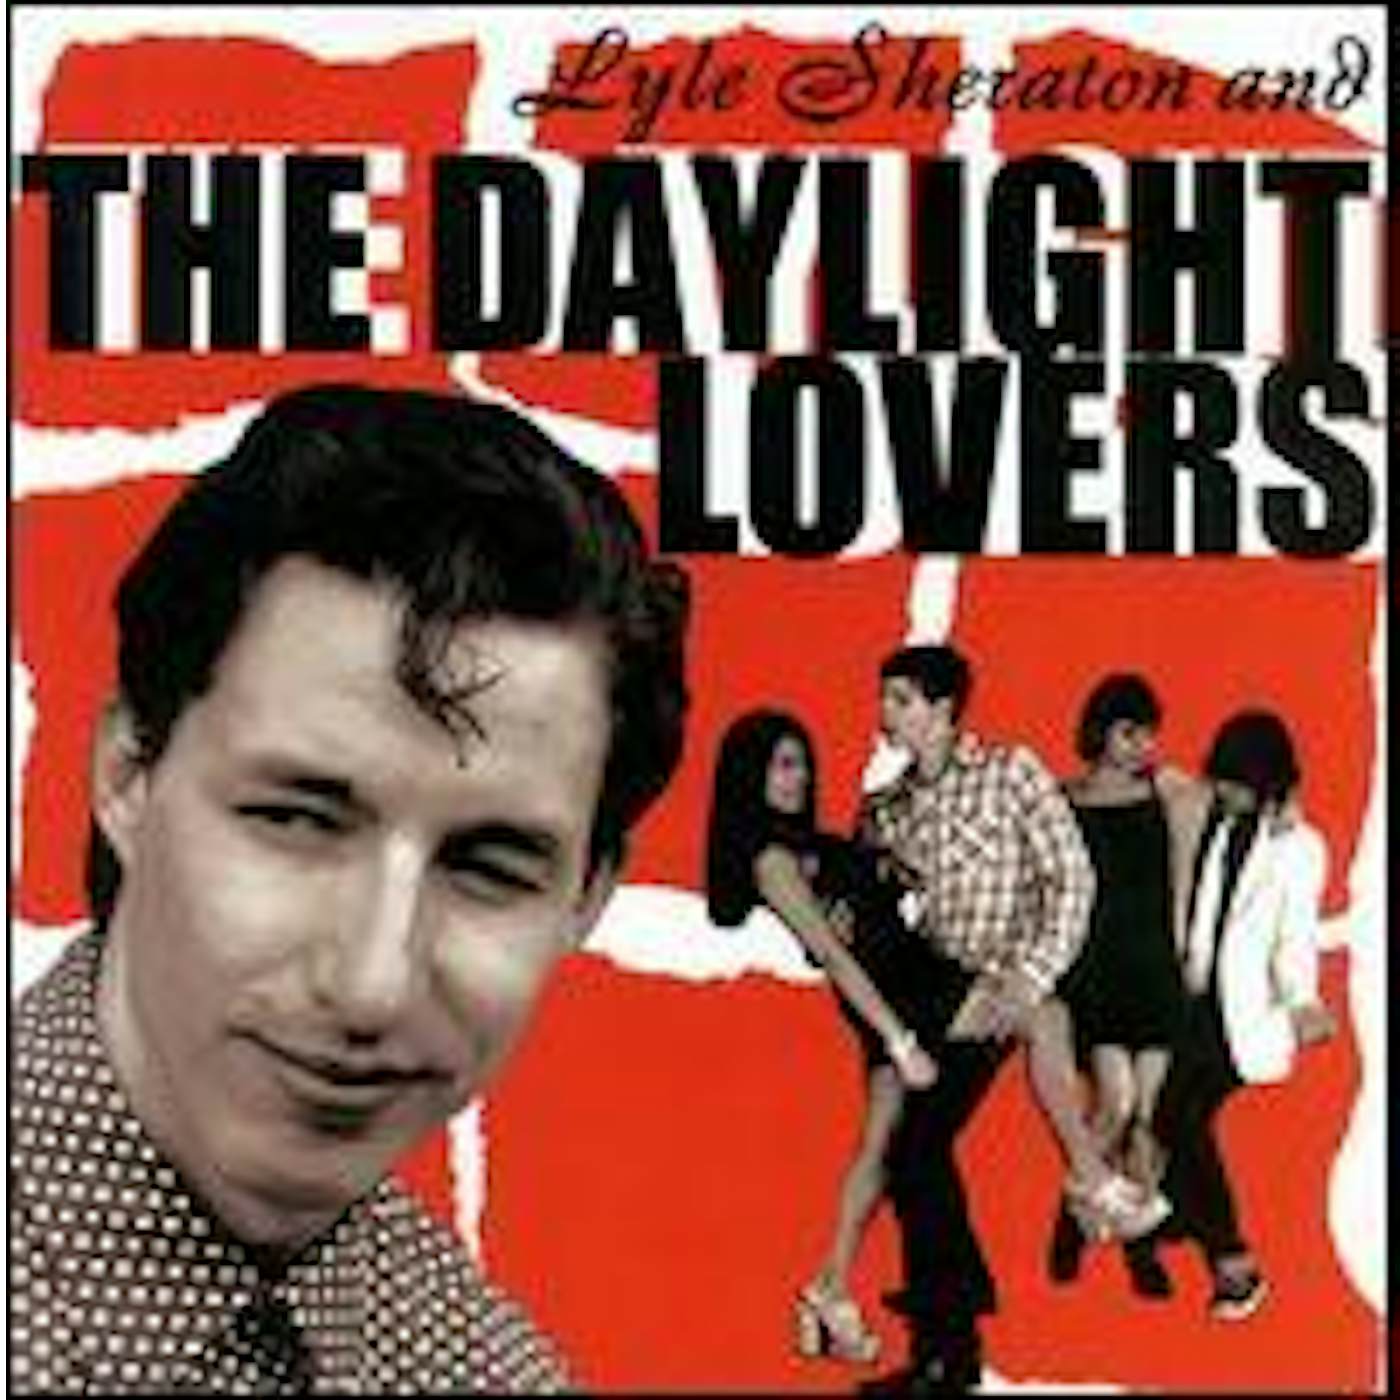 Lyle Sheraton & The Daylight Lovers Lyle Sheraton And The Daylight Lovers Vinyl Record